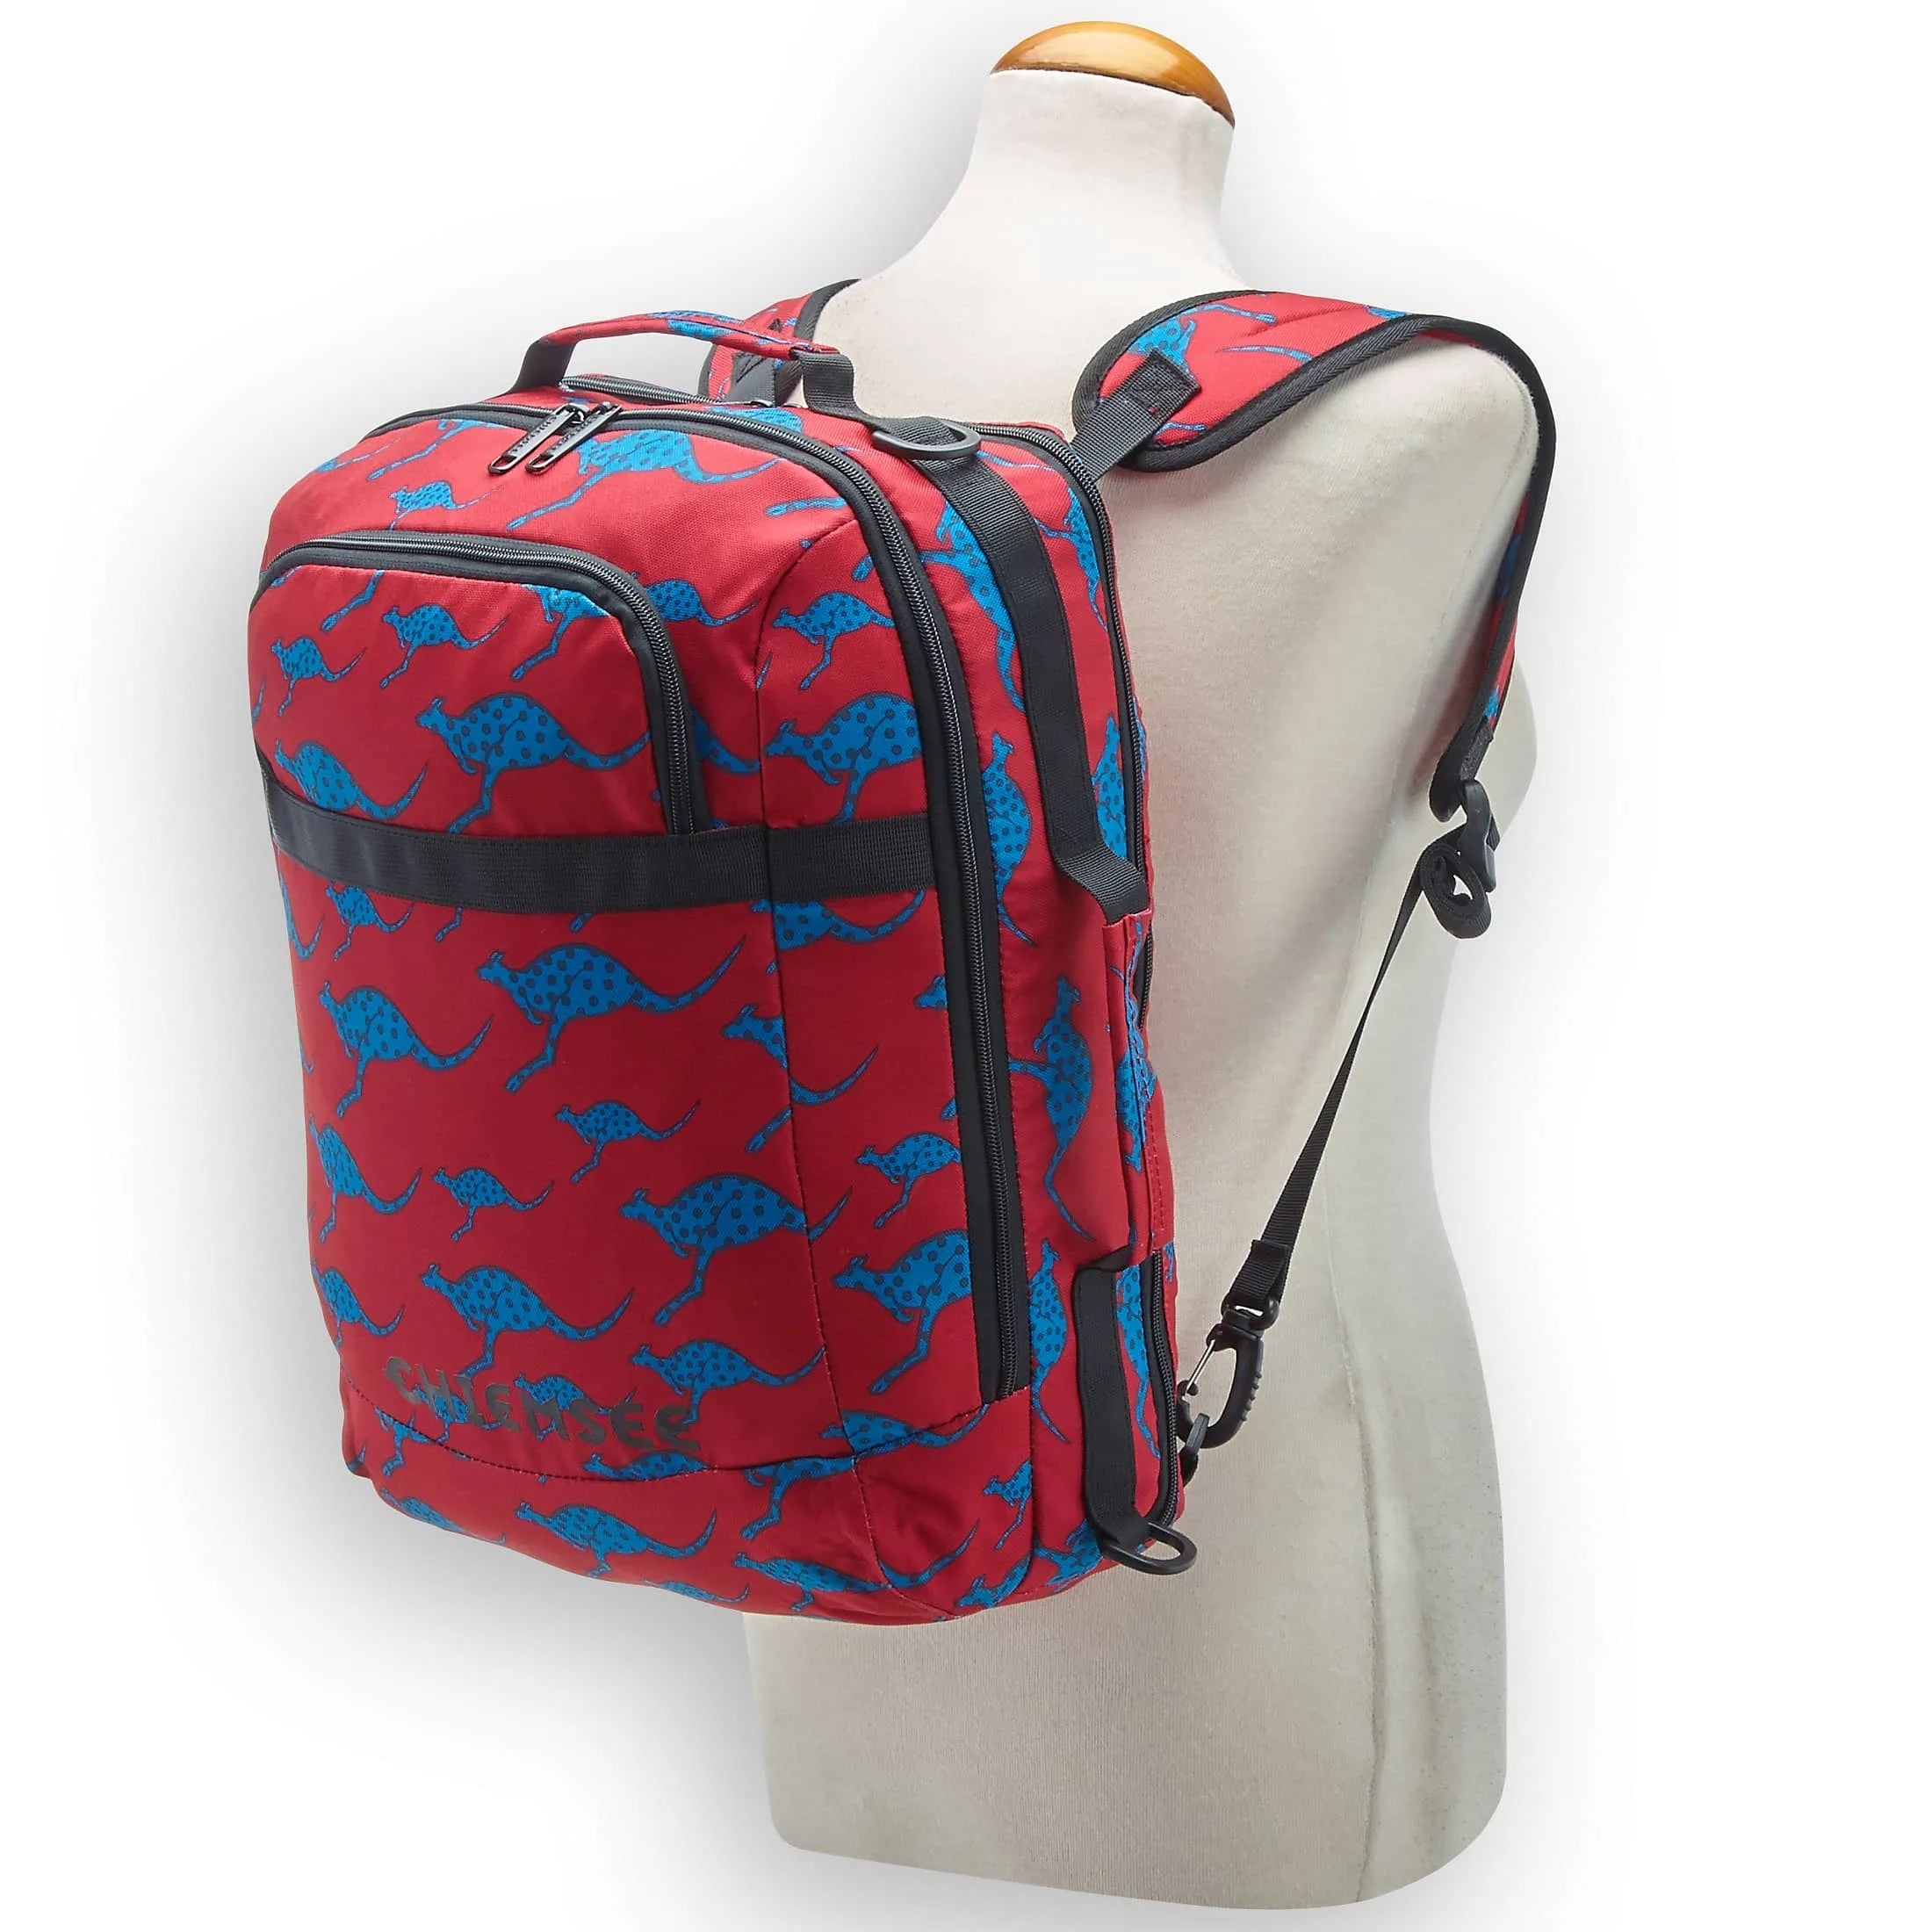 Chiemsee Sports & Travel Bags Travel Rucksack 41 cm - melange